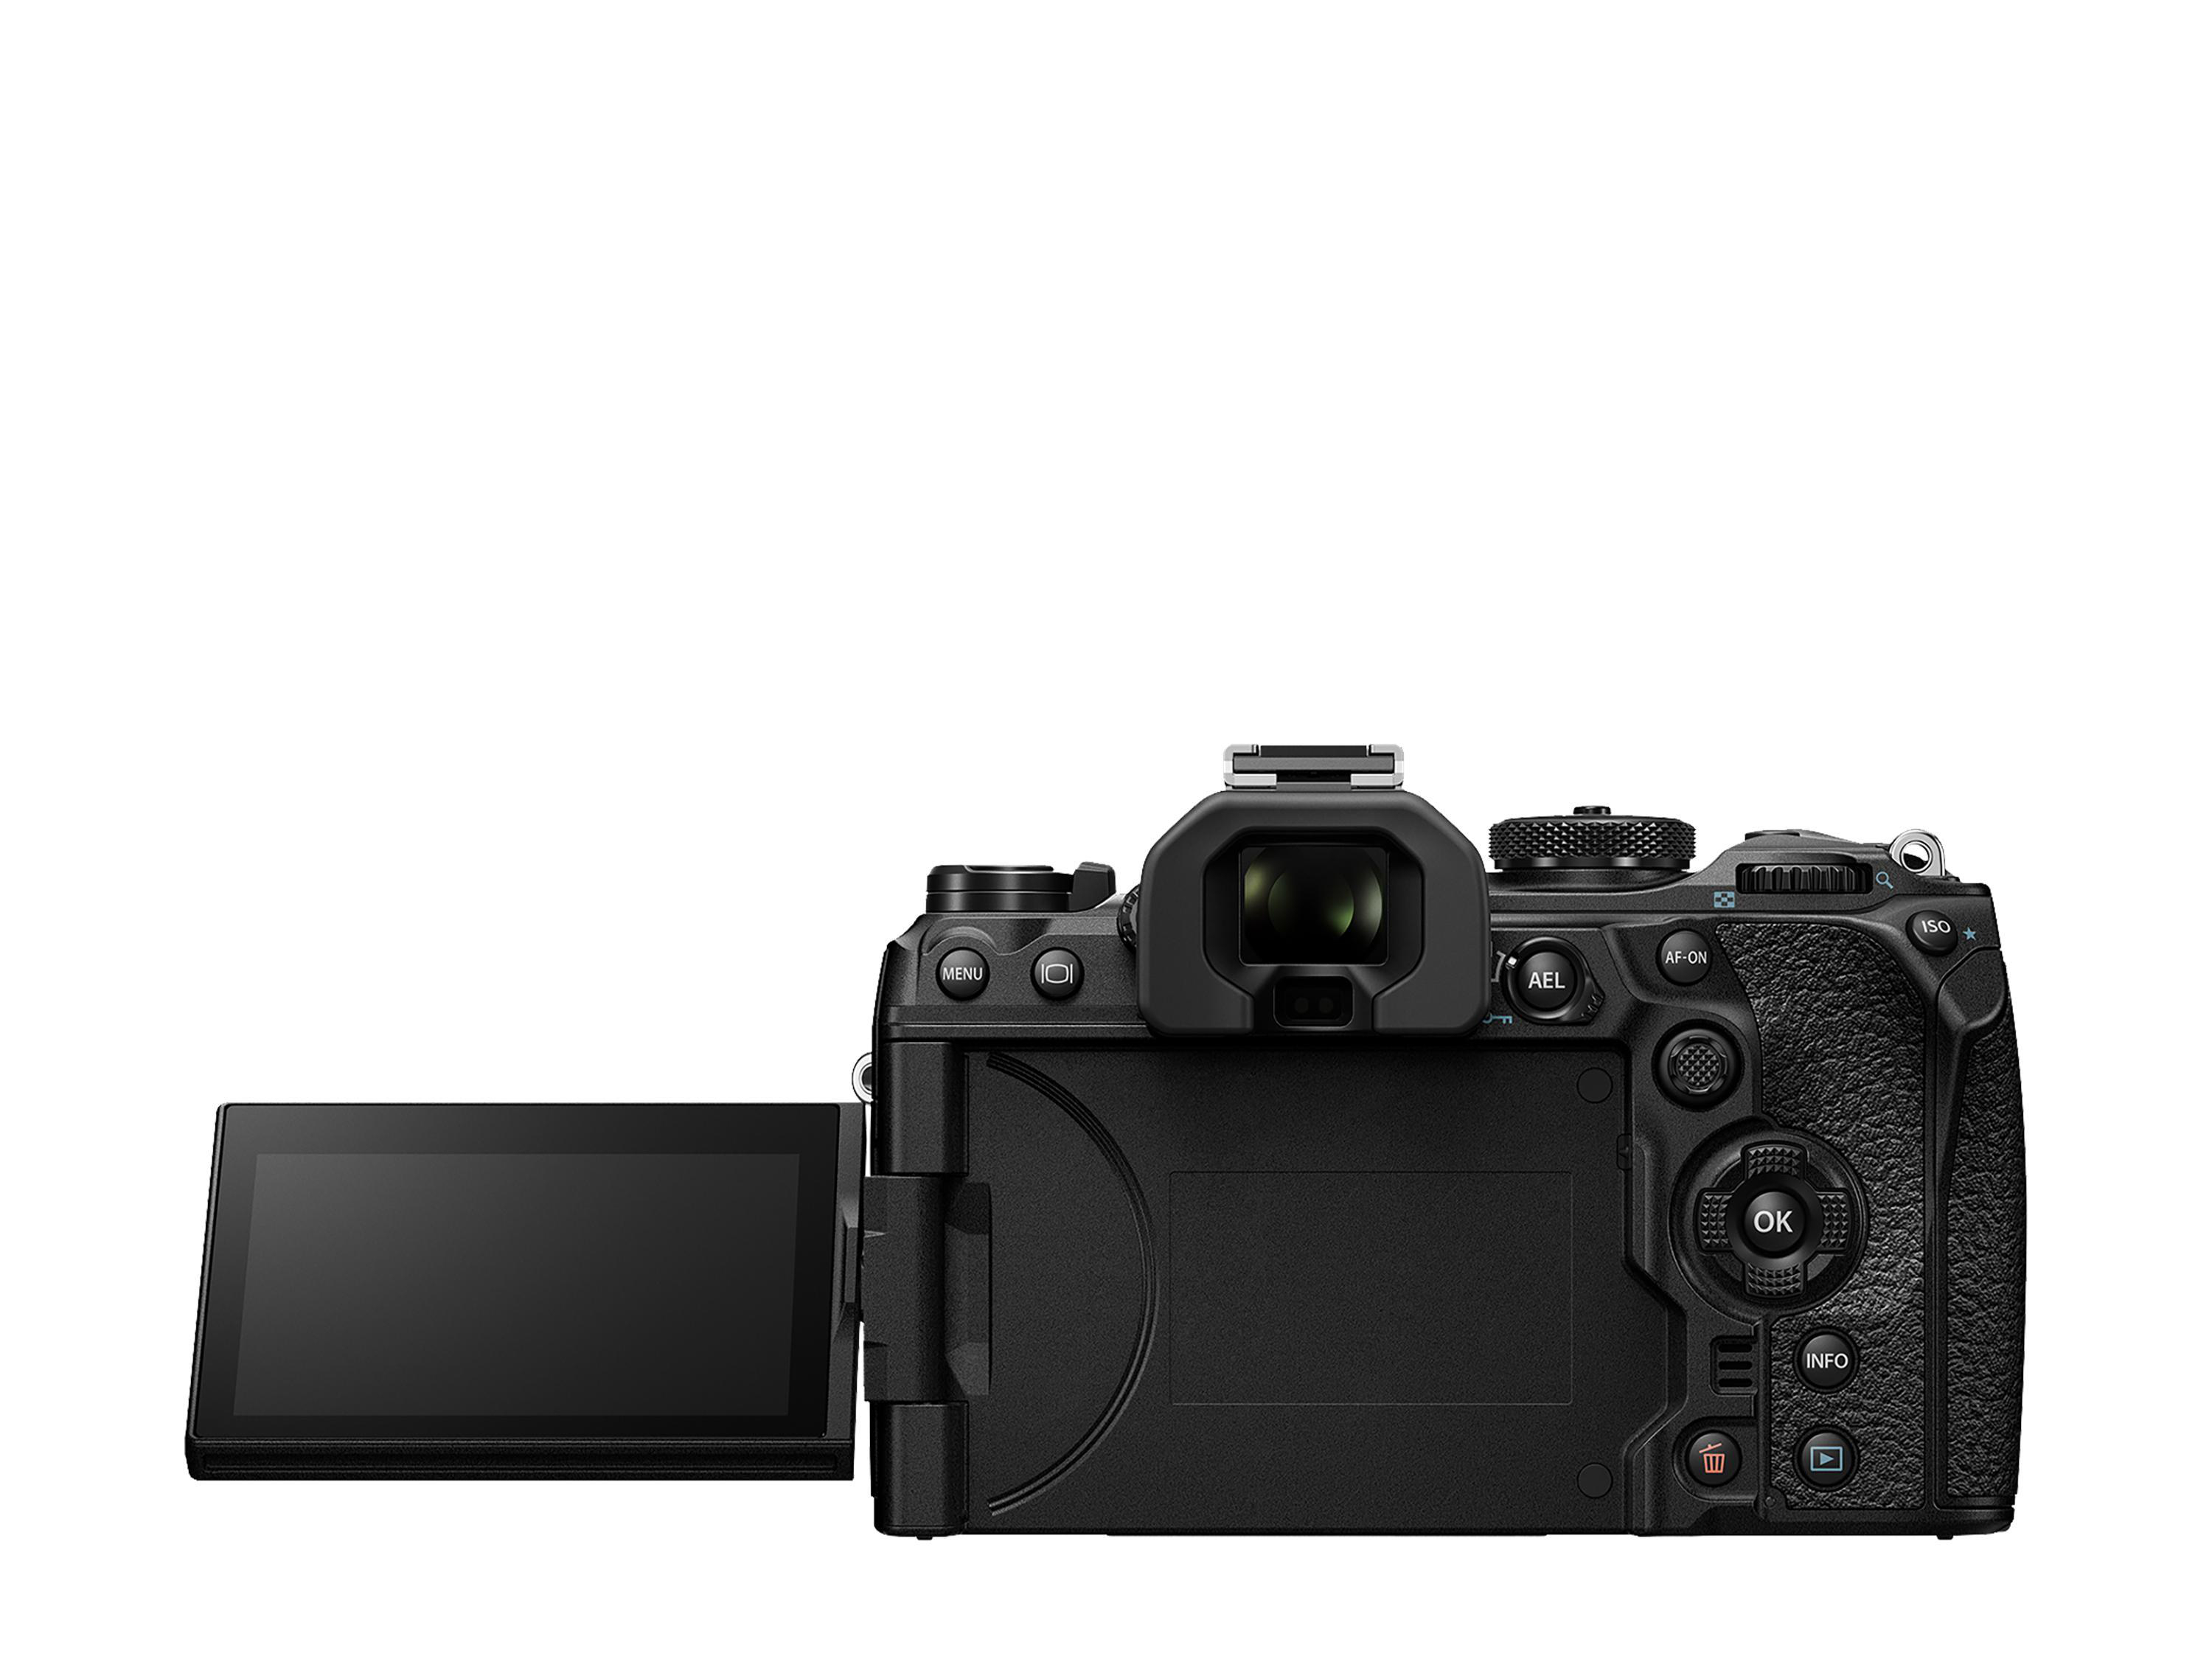 OM SYSTEM OM-1 Body Systemkamera, Touchscreen, 7,6 cm WLAN Display